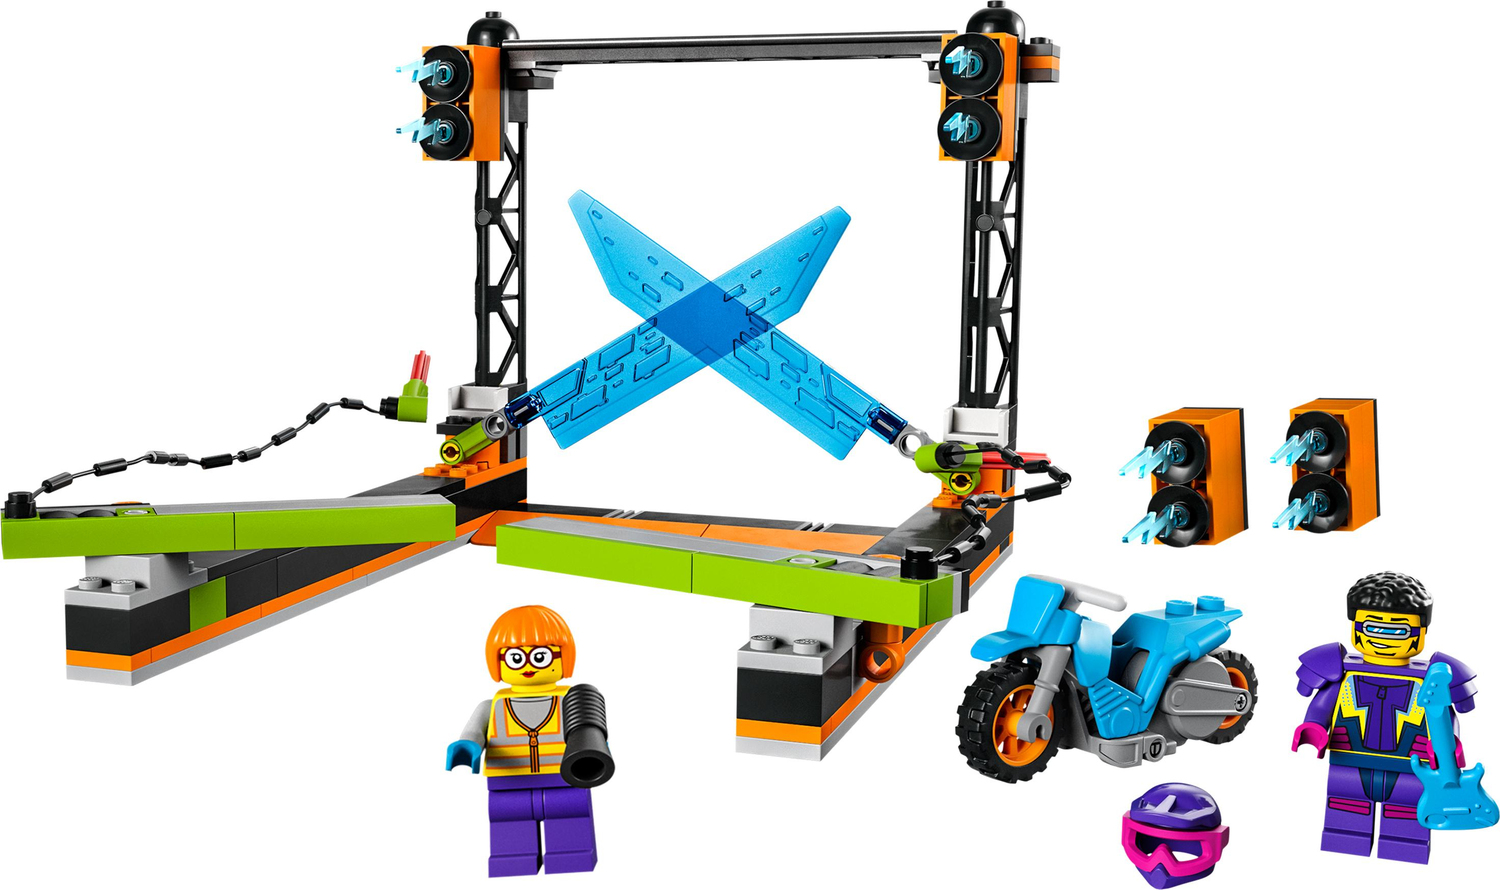 LEGO City Stuntz The Blade Stunt Challenge Set